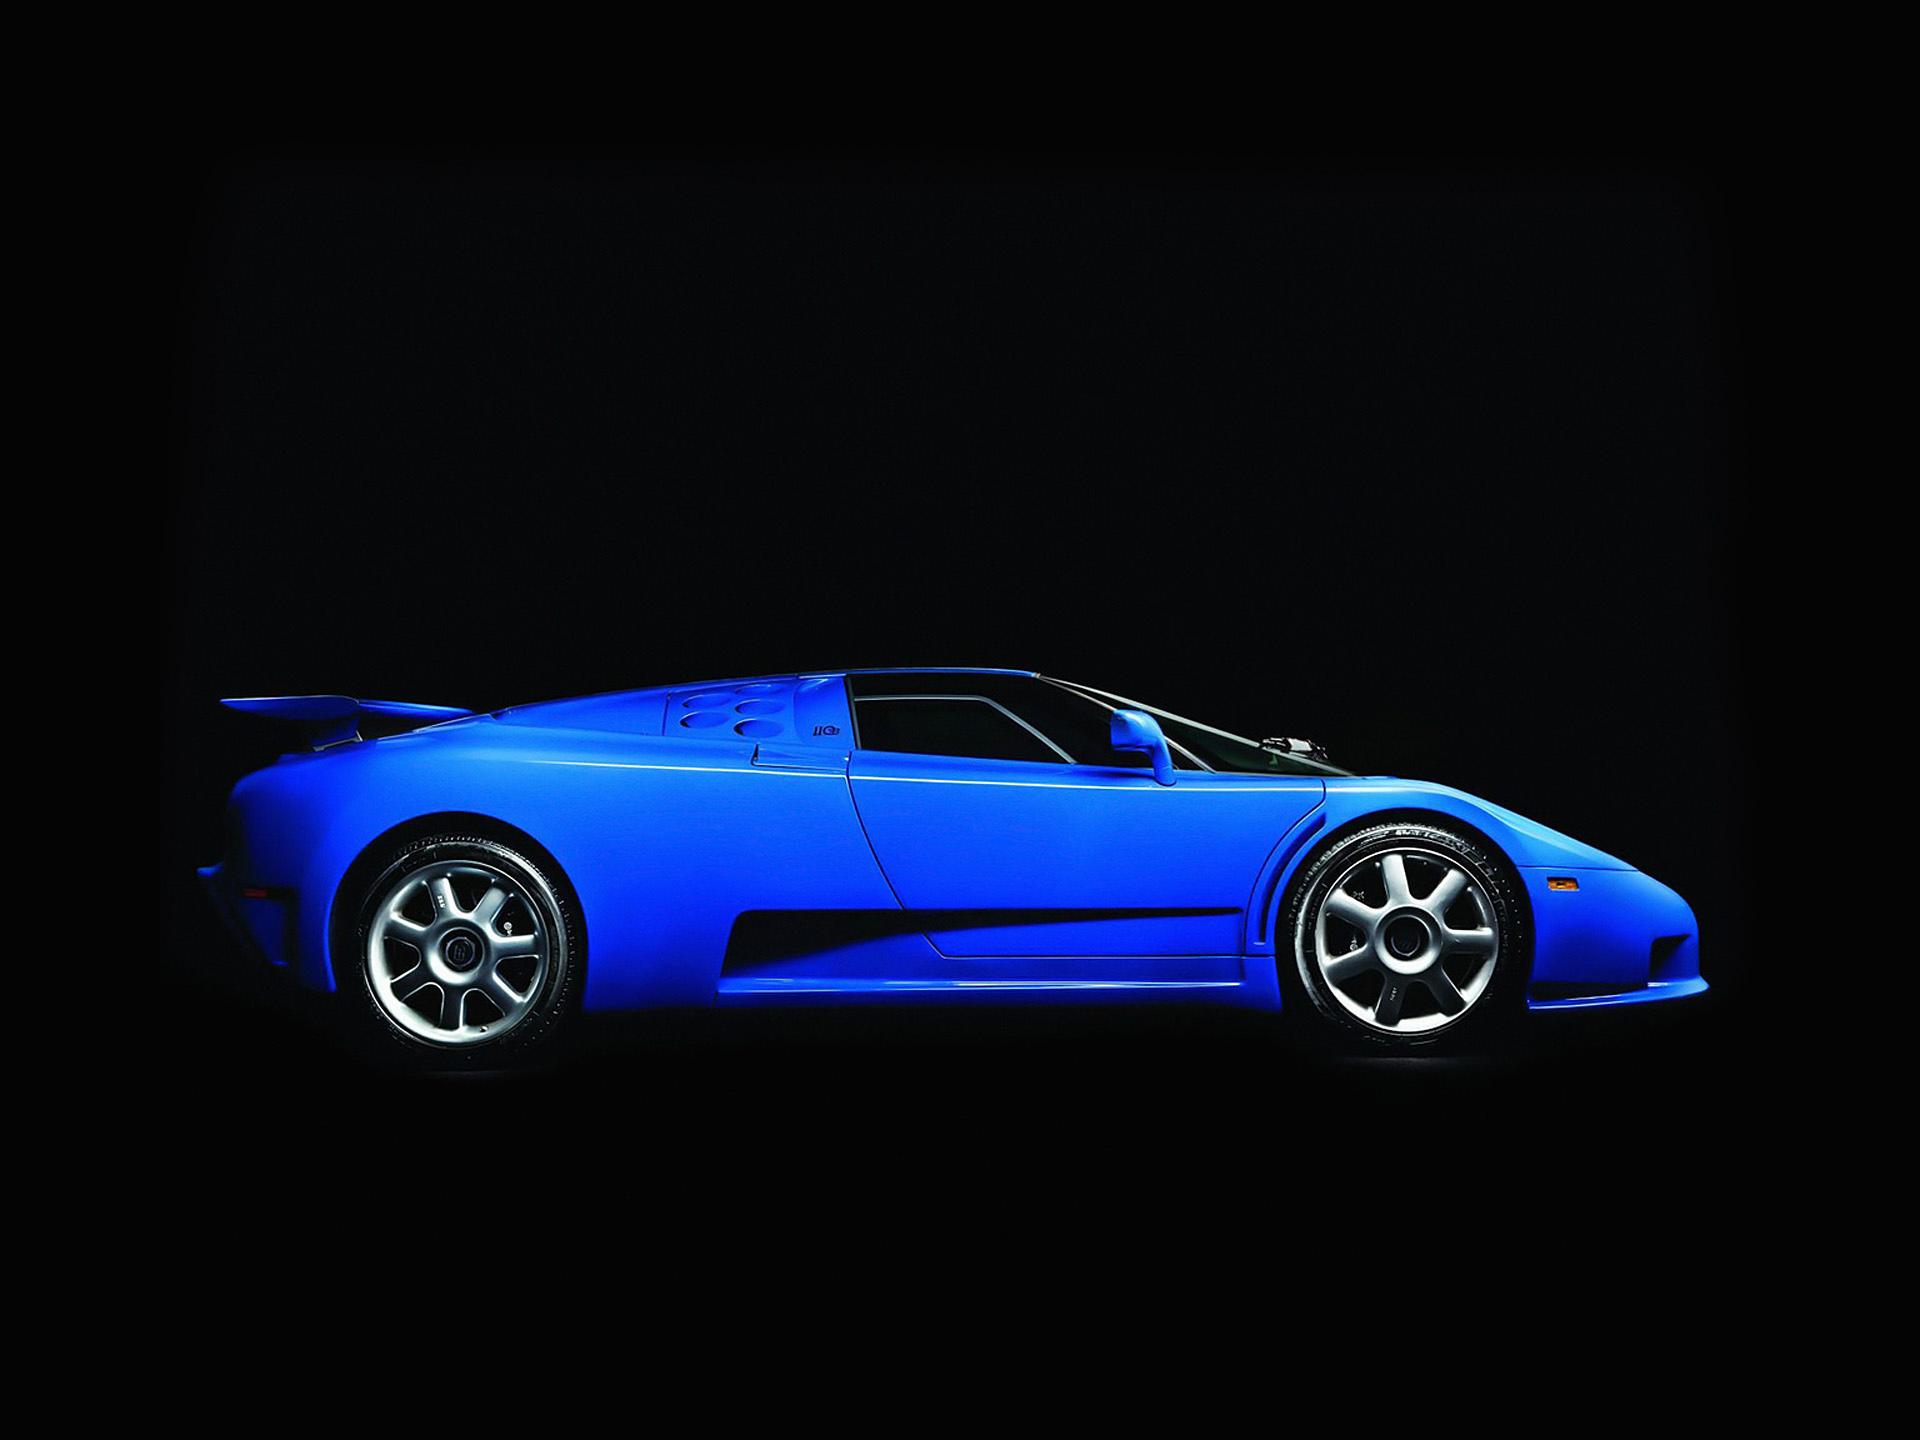 Bugatti EB110 GT at 1280 x 960 size wallpapers HD quality